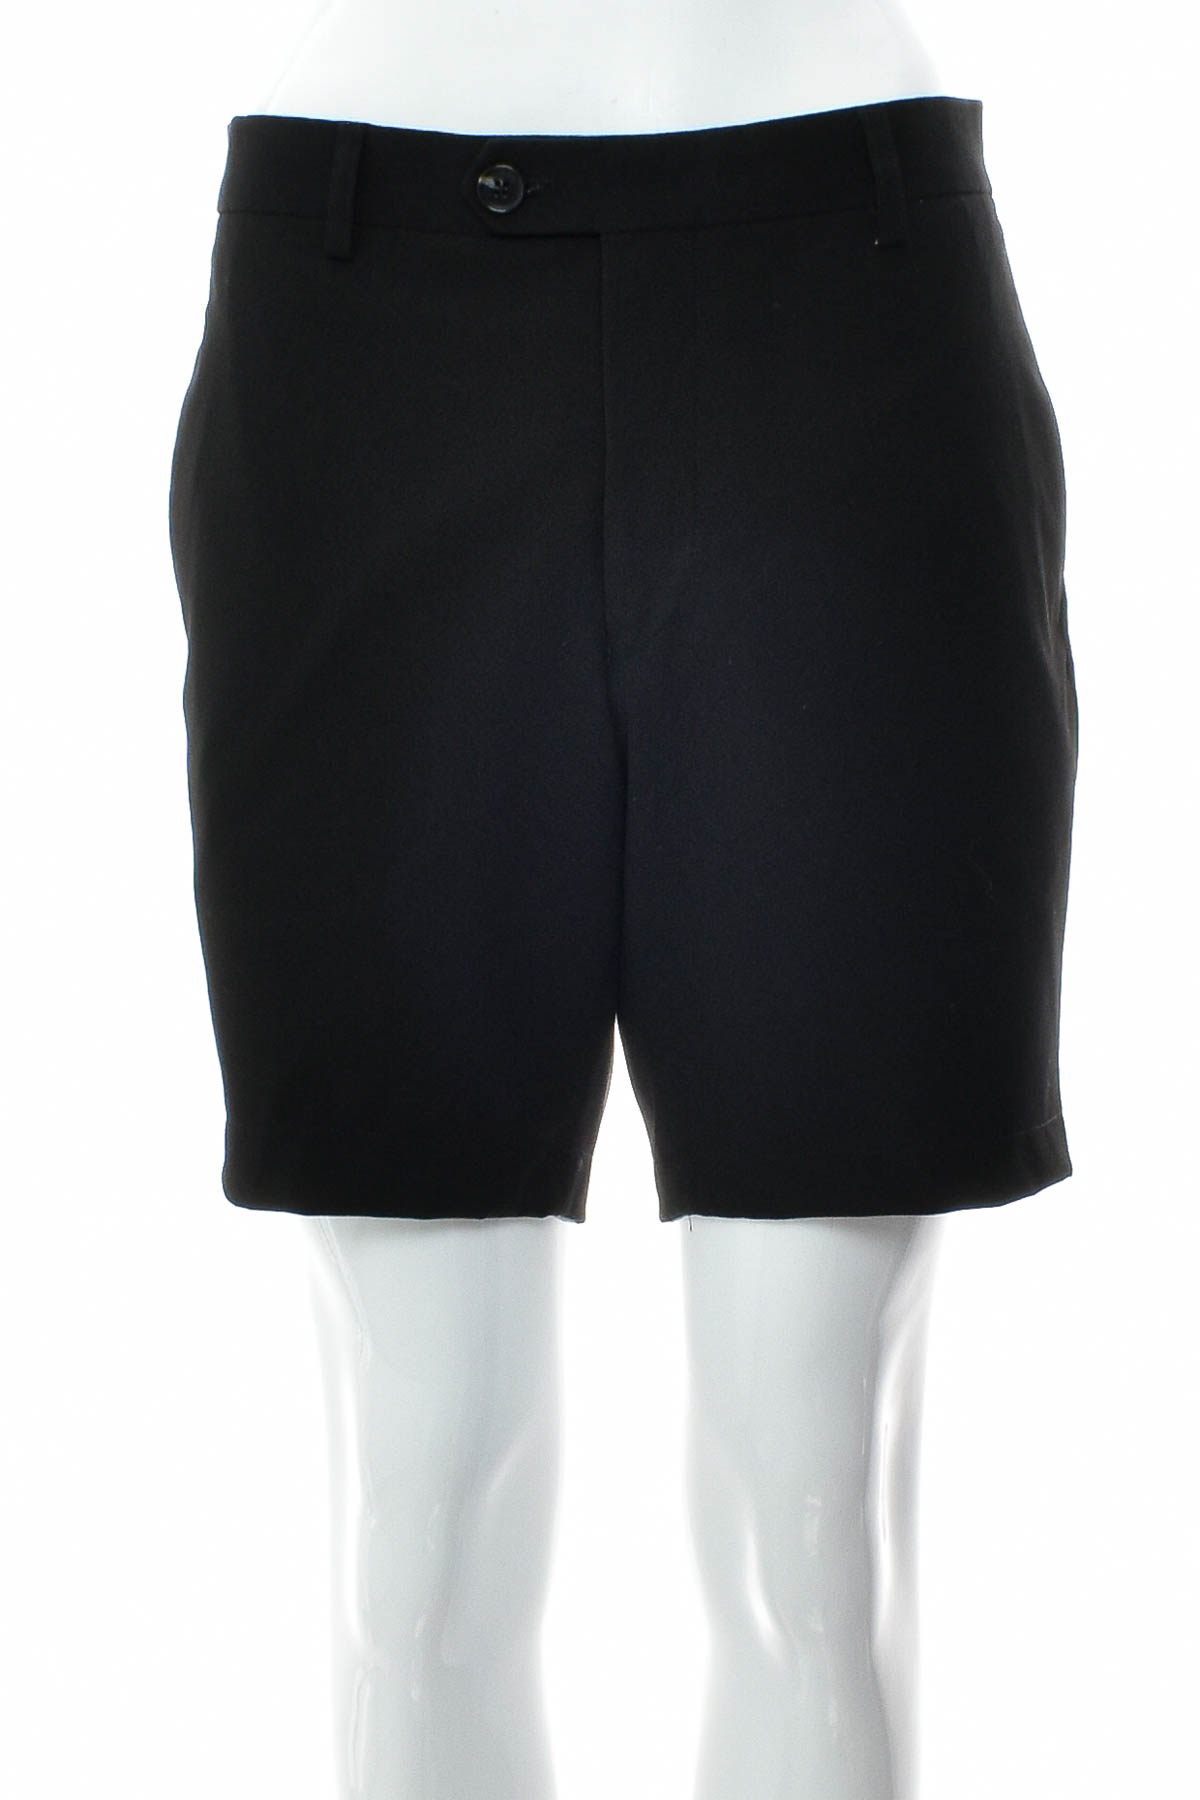 Men's shorts - Minimum - 0